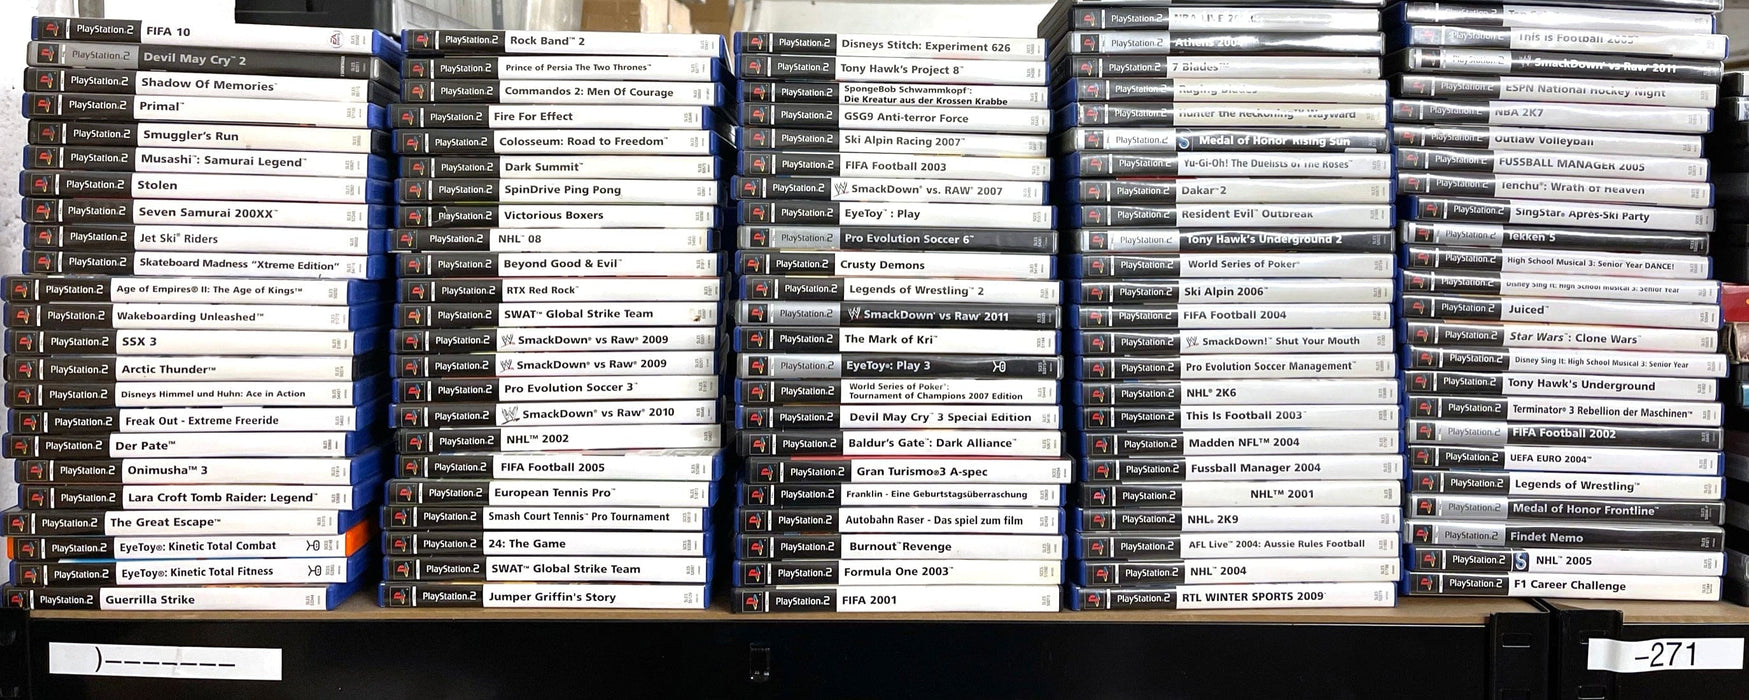 Glaciergames PlayStation 2 Game The Getaway [Platinum] PlayStation 2 (Nr.657)